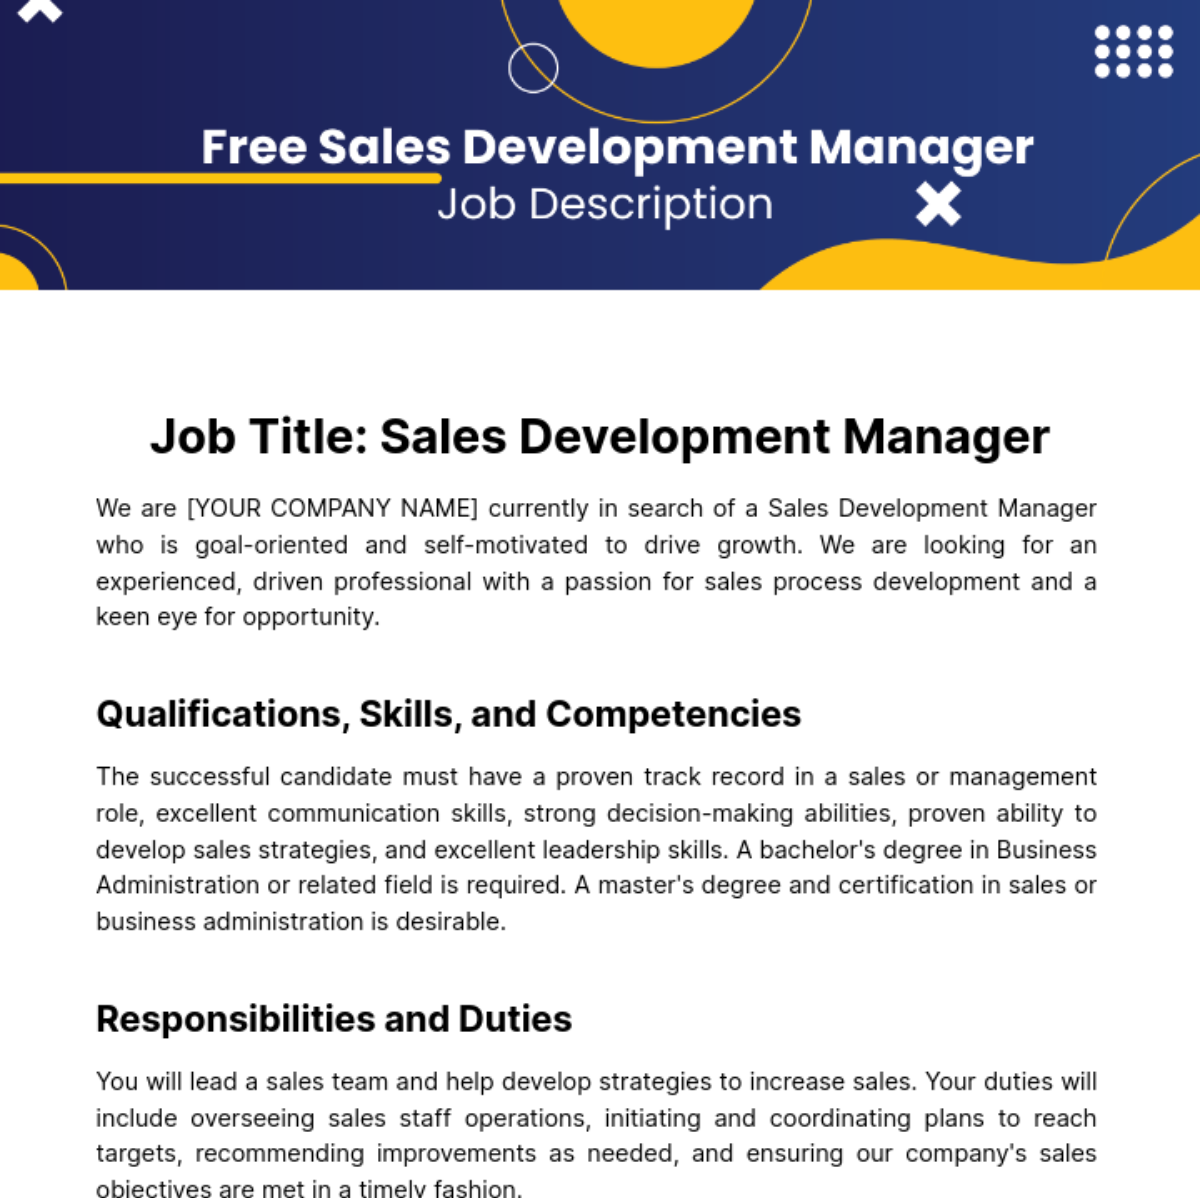 Sales Developmenet Manager Job Description Template